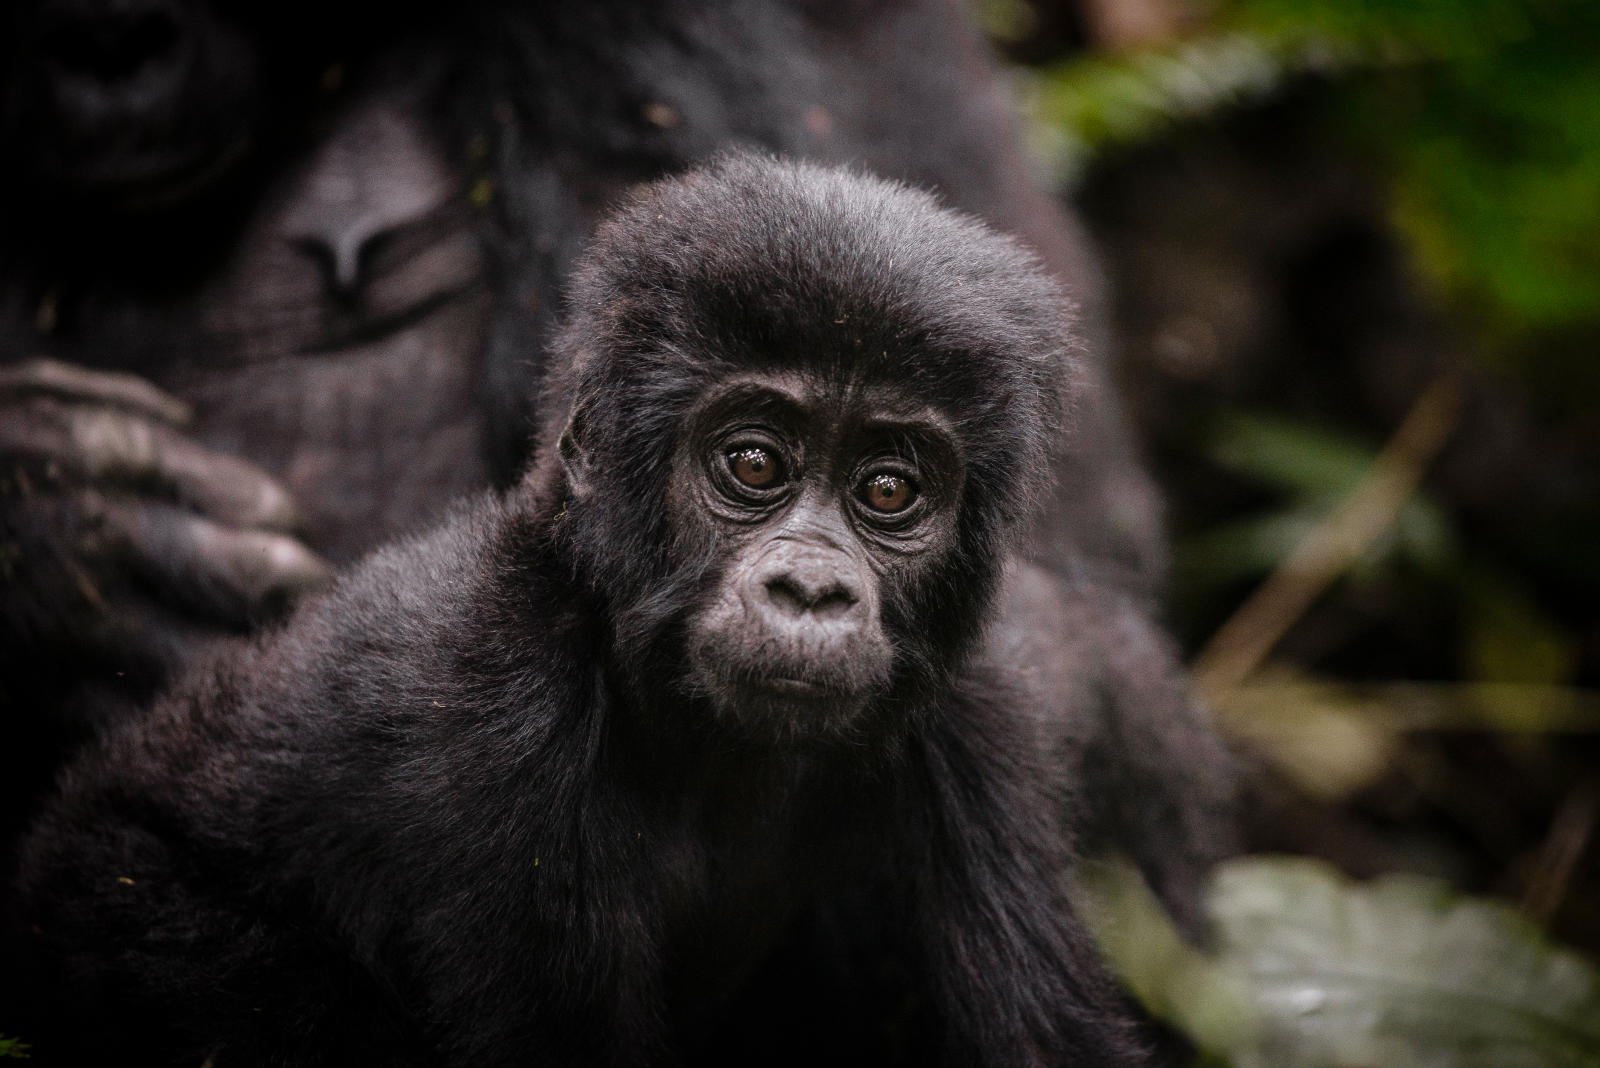 Purchasing Your Gorilla Permit In Rwanda